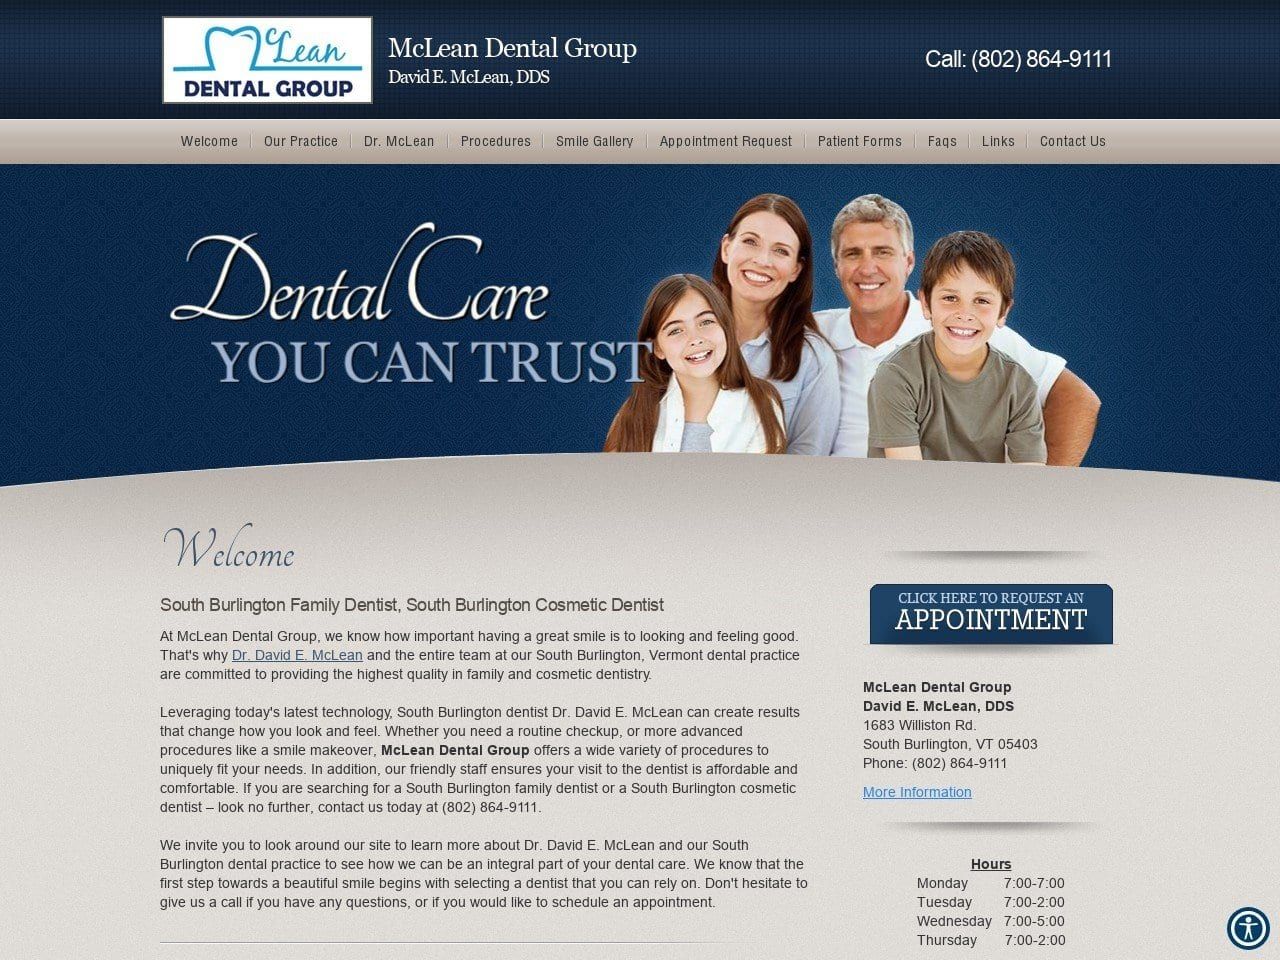 McLean Dental Group Website Screenshot from mcleandentalgroup.com